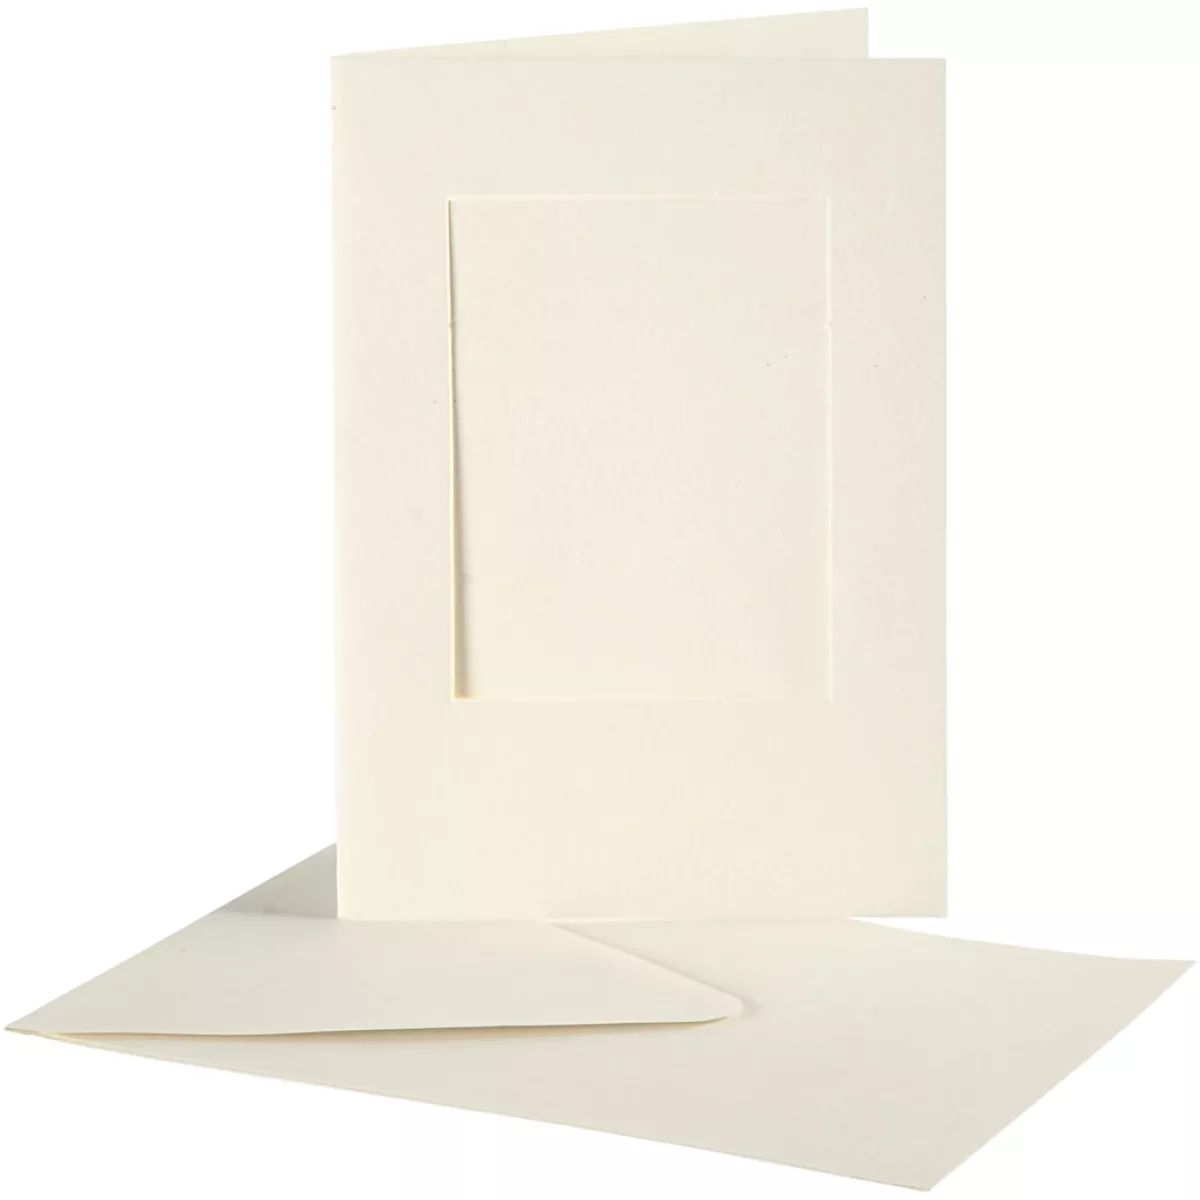 #1 - Passepartoutkort med kuvert, rektangulær, kort str. 10,5x15 cm, kuvert str. 11,5x16,5 cm, råhvid, 10 sæt/ 1 pk.